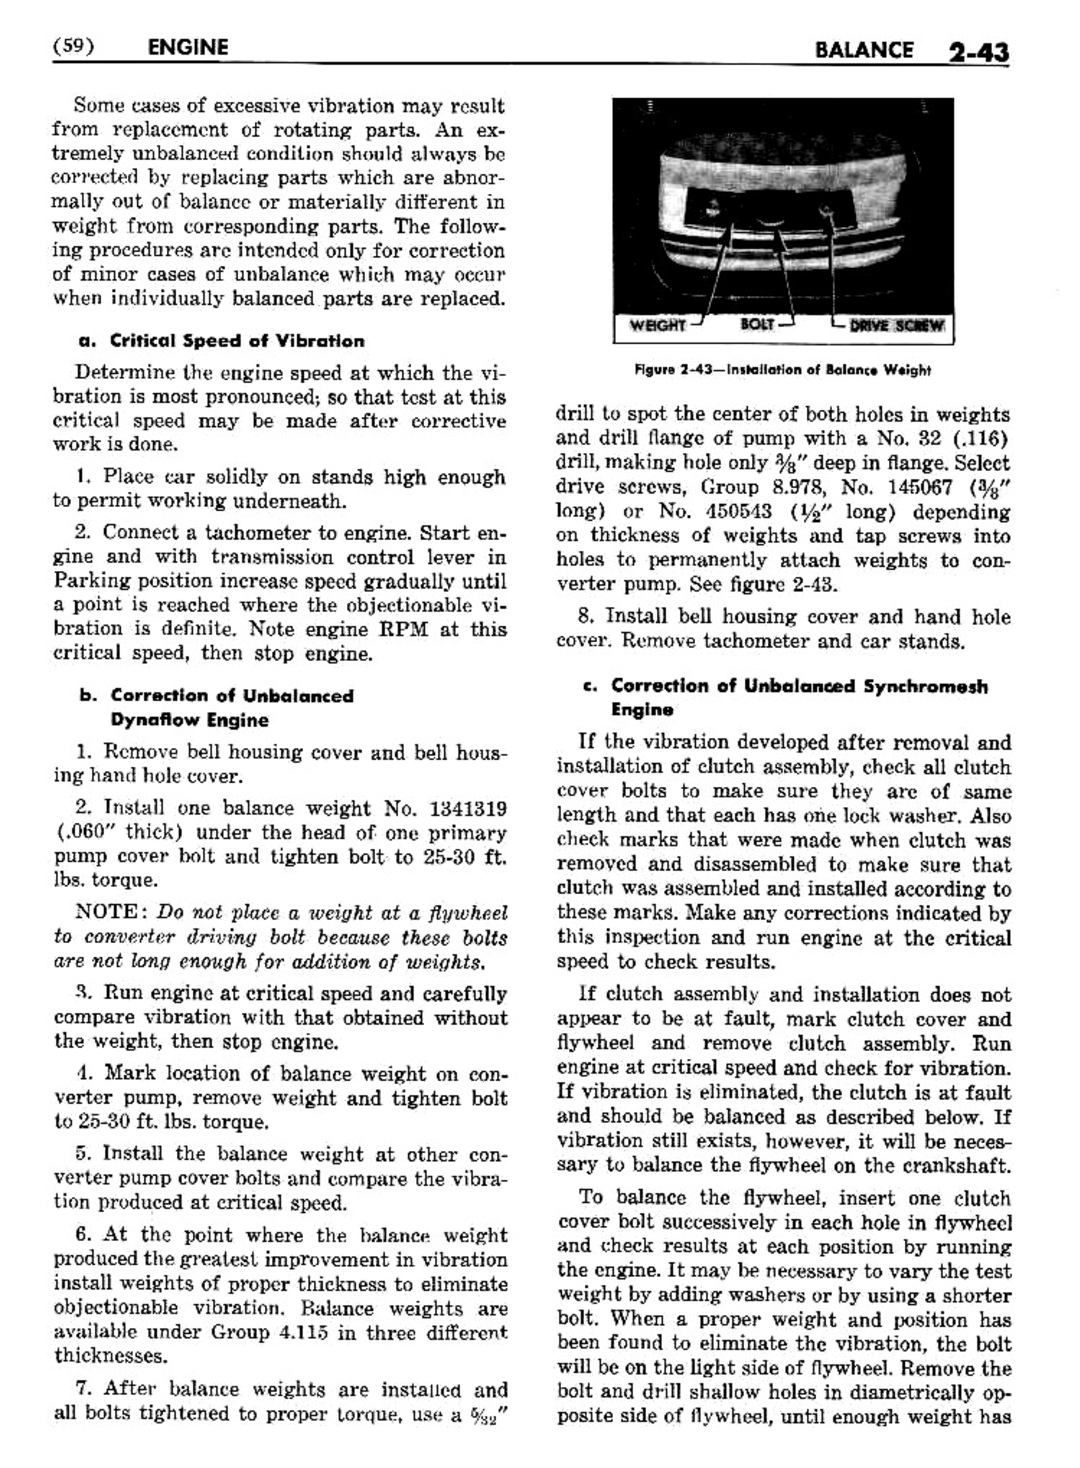 n_03 1954 Buick Shop Manual - Engine-043-043.jpg